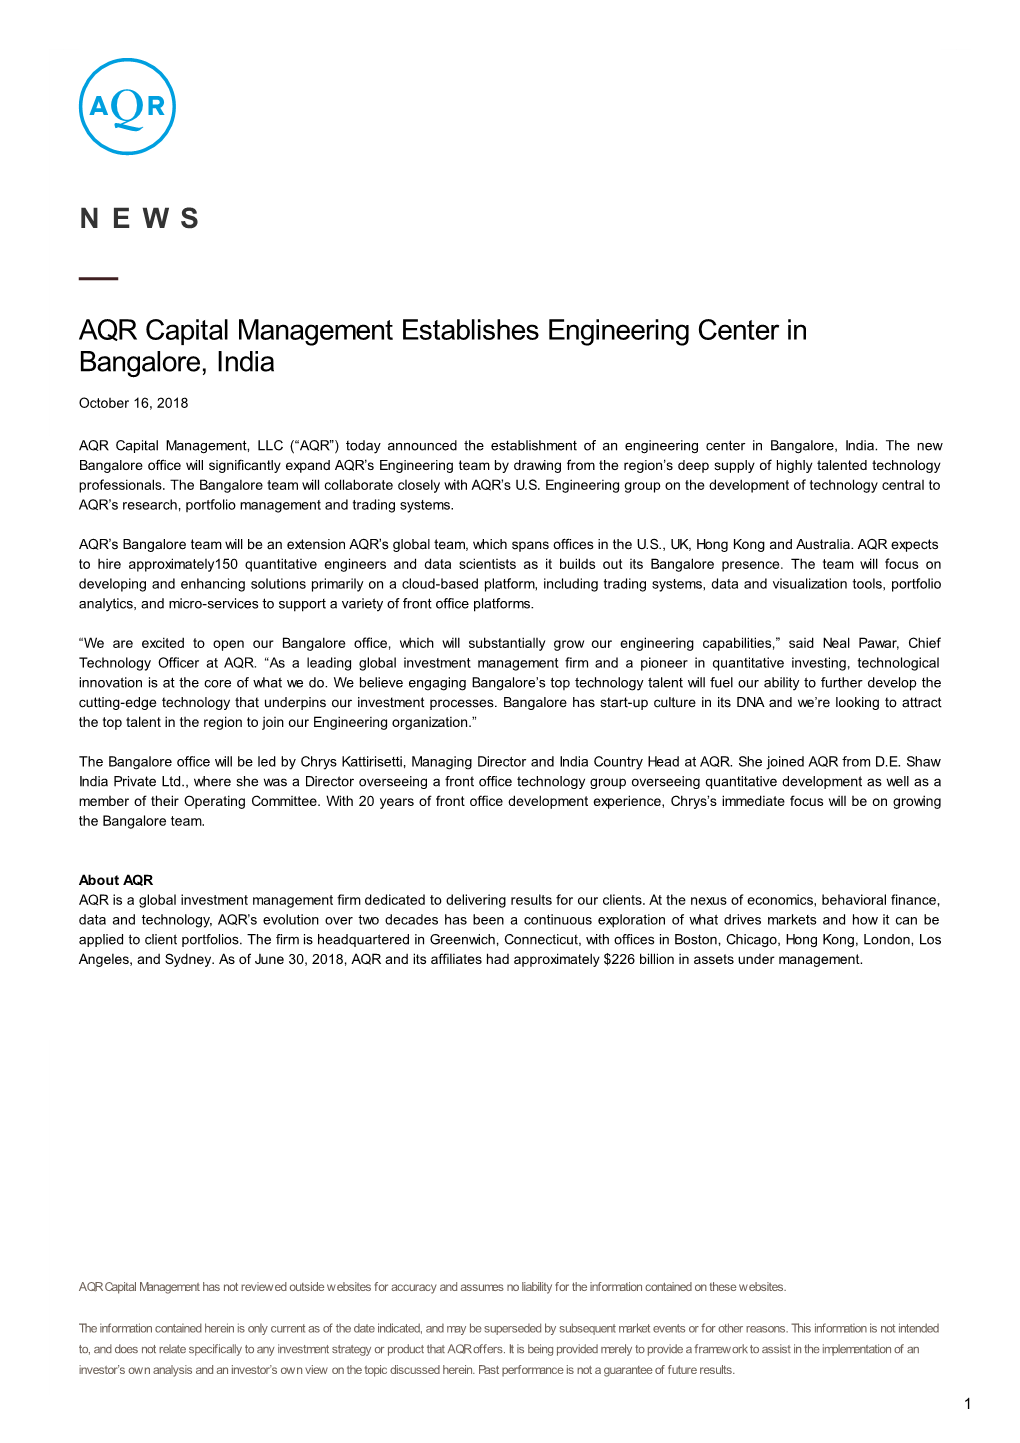 AQR Capital Management Establishes Engineering Center in Bangalore, India